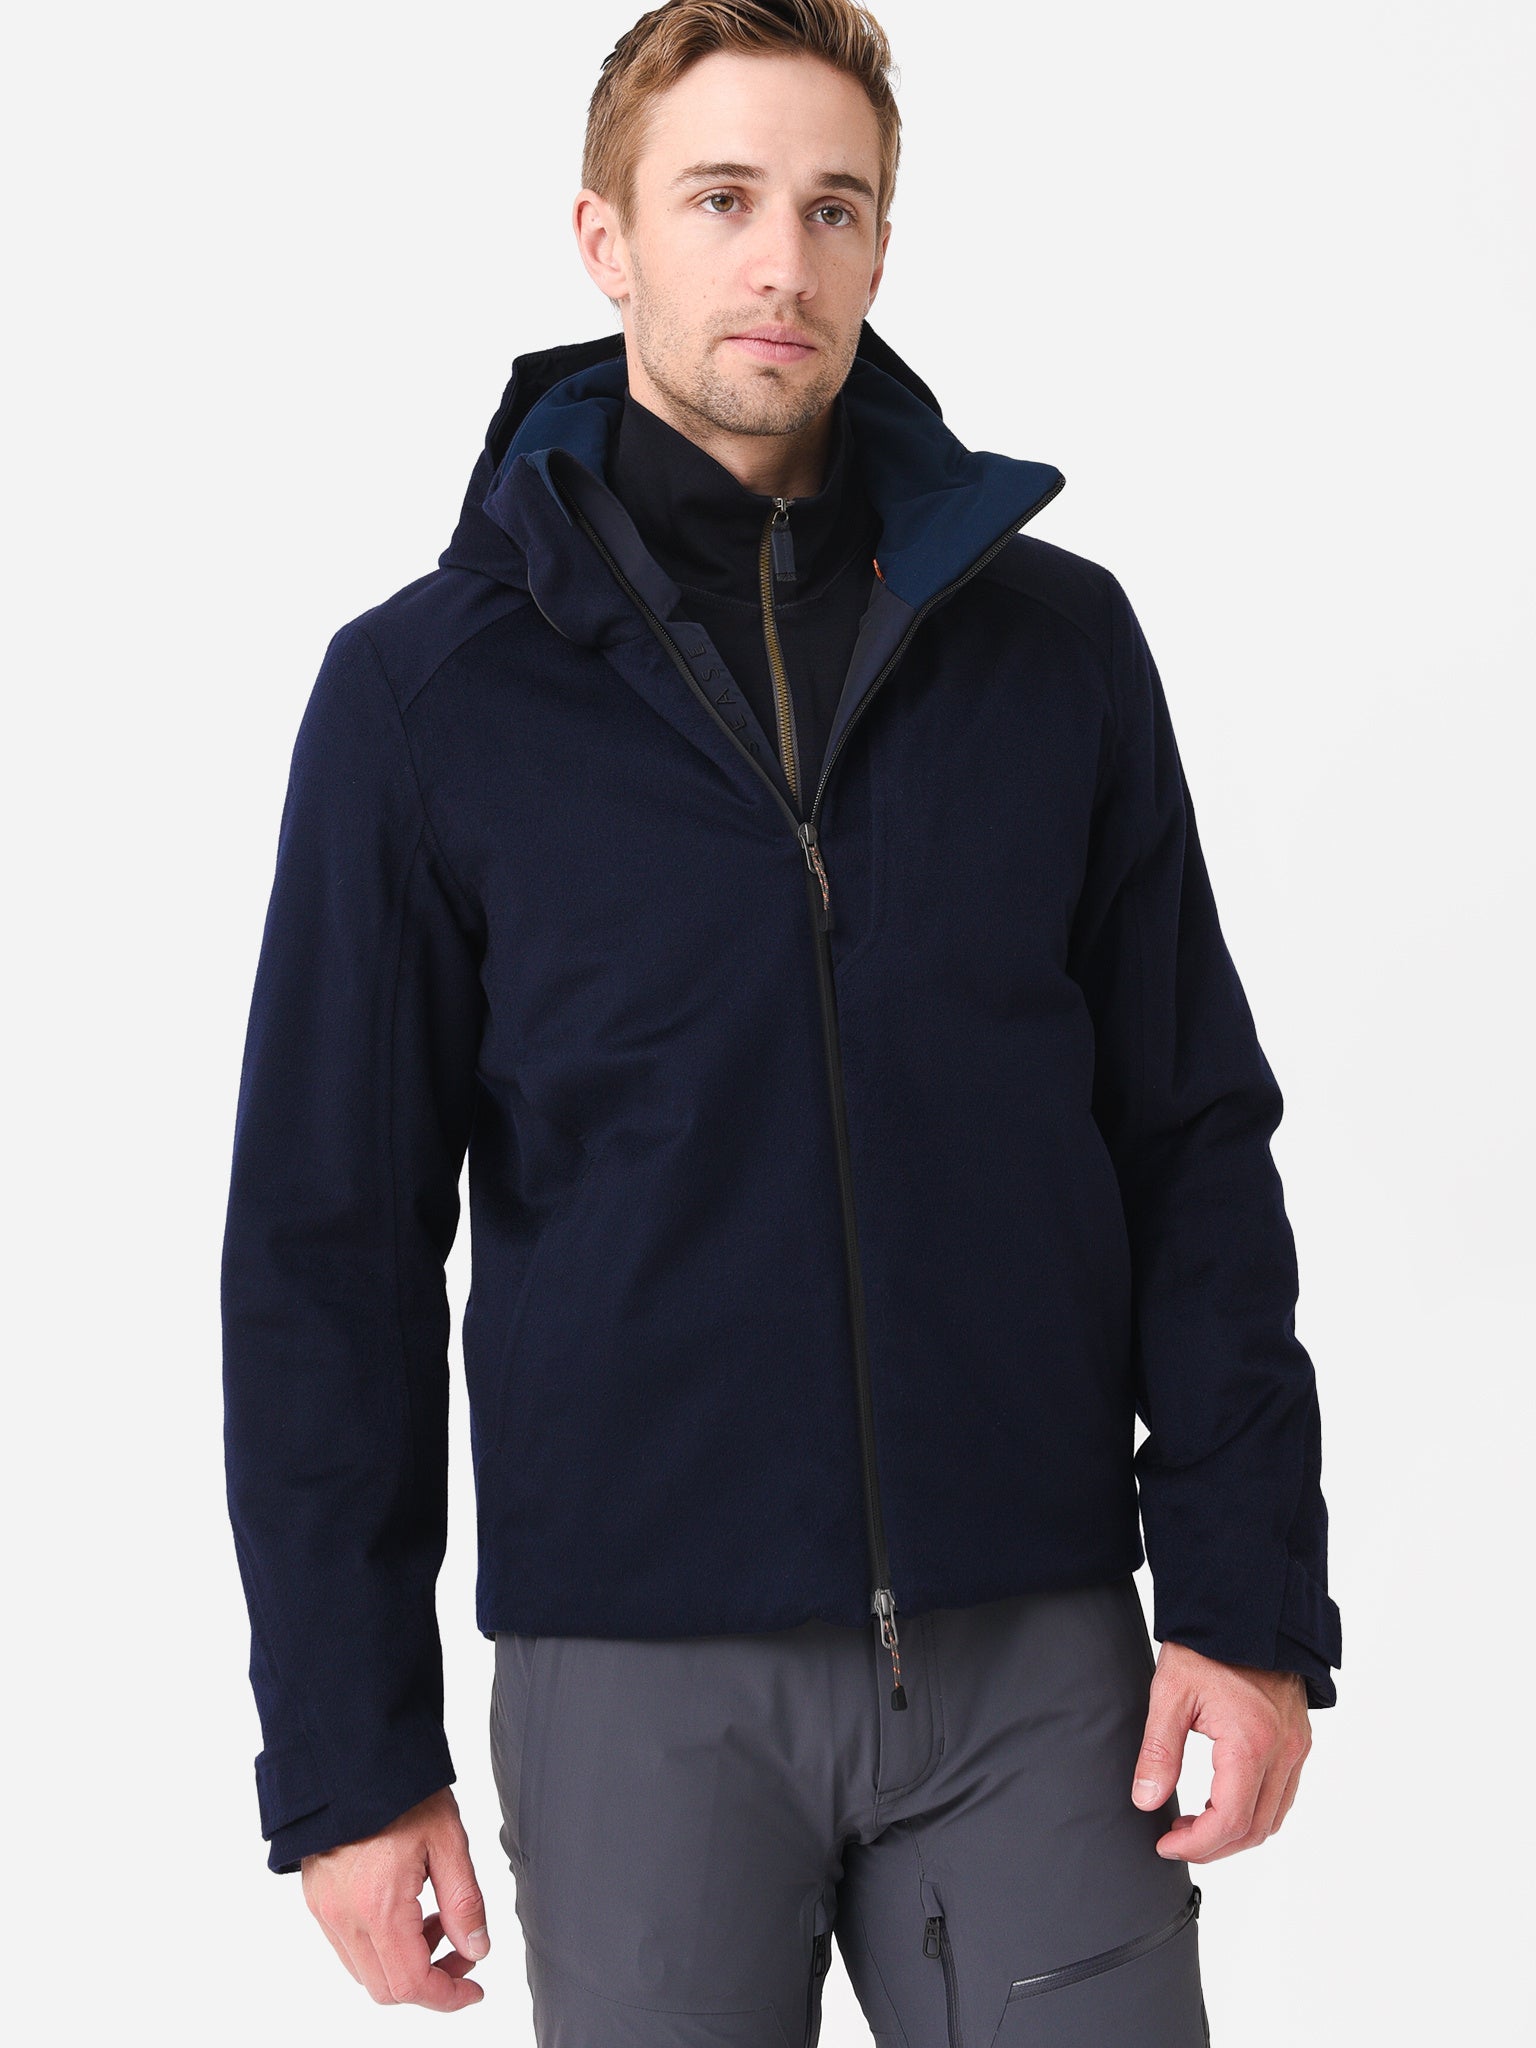 Sease Men's Balma Ski Jacket – saintbernard.com